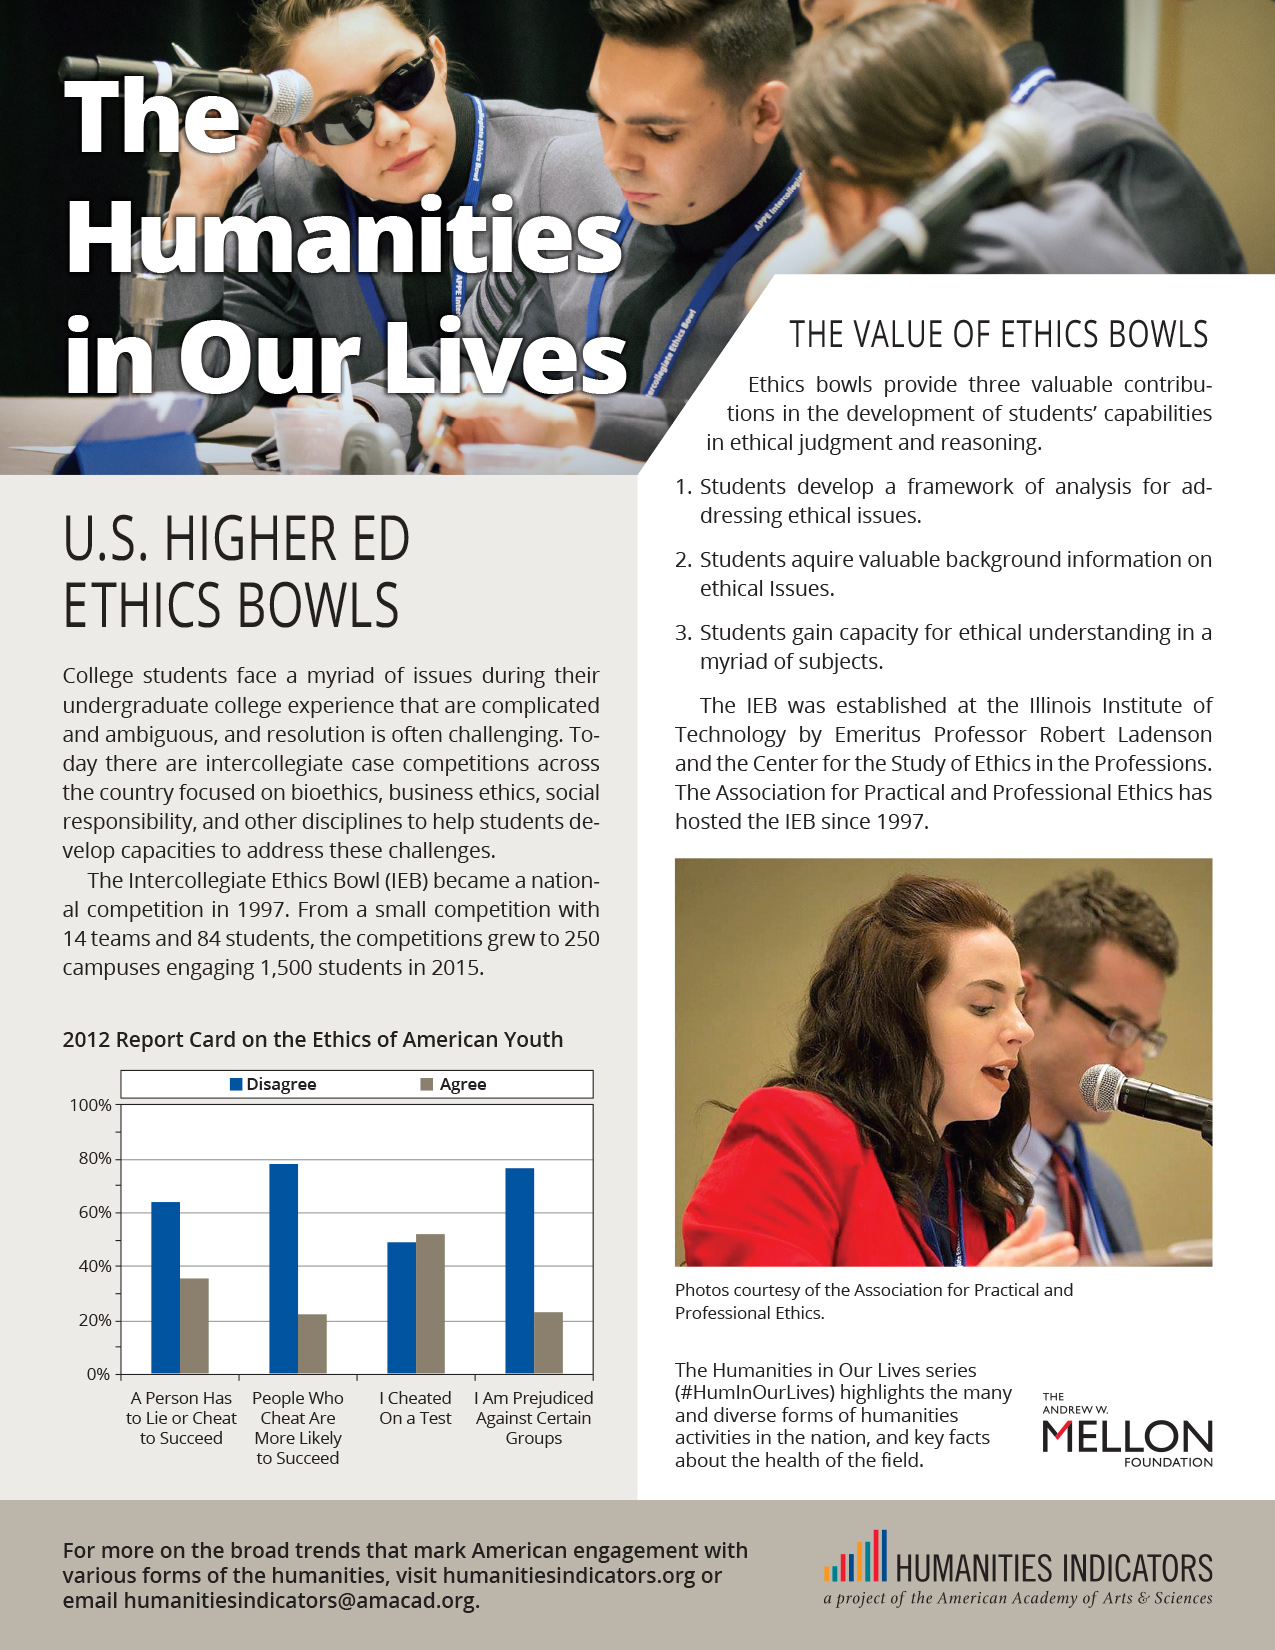 US Higher Ed Ethics Bowls